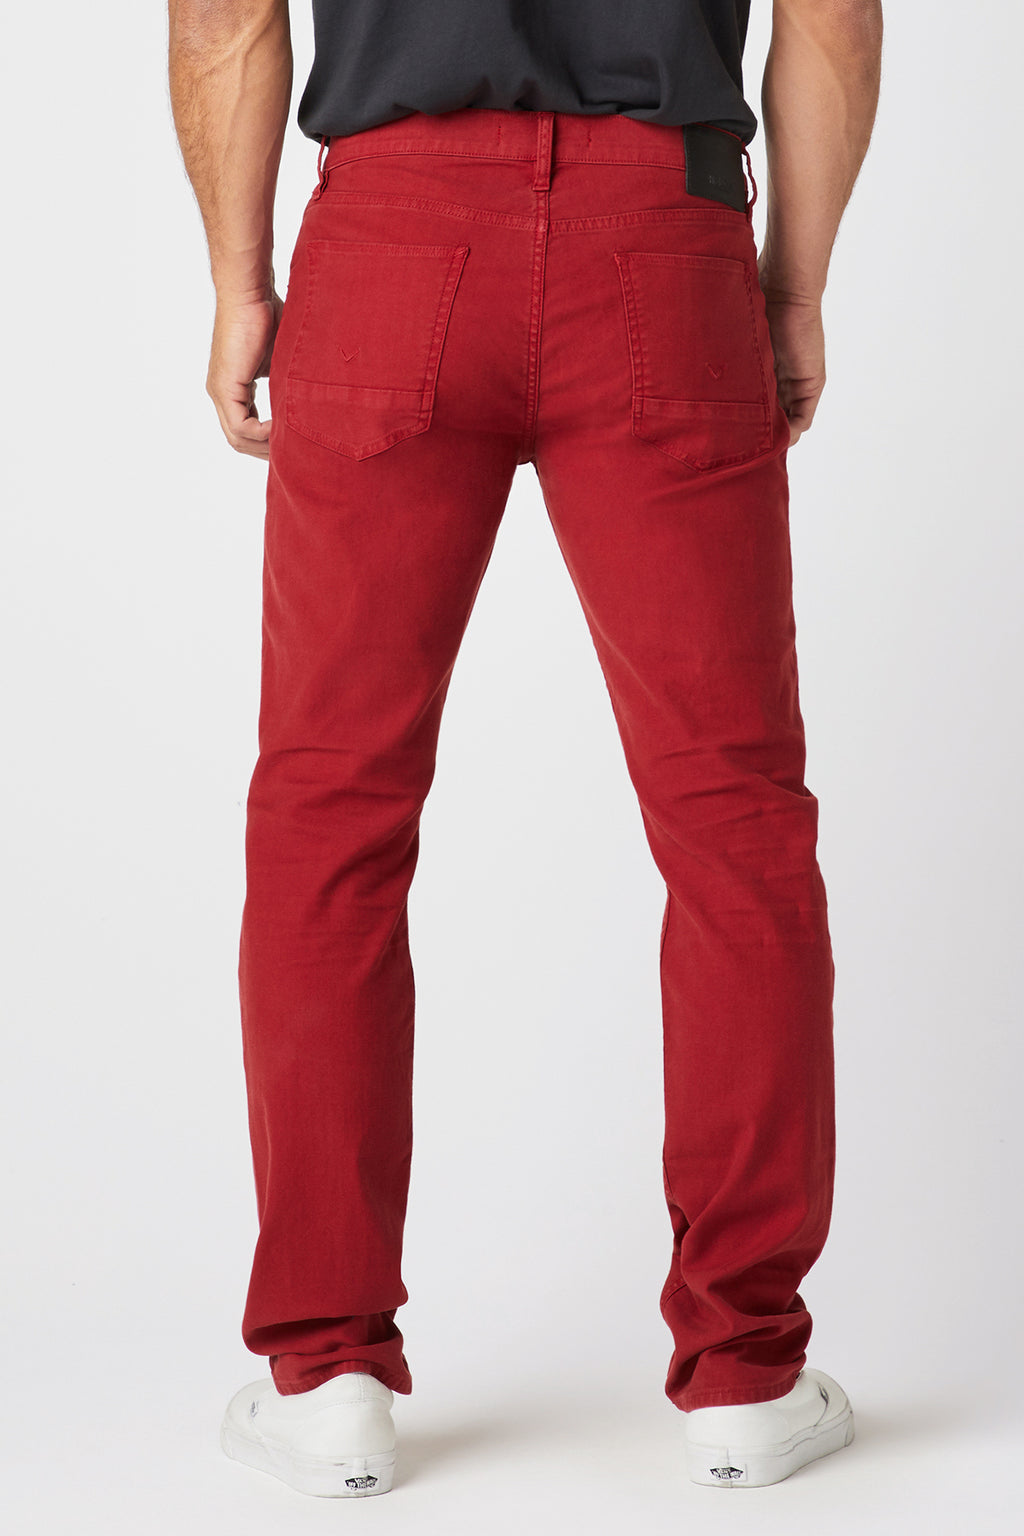 Shop Men's Denim Slim Straight at Hudson Jeans | Hudson Jeans